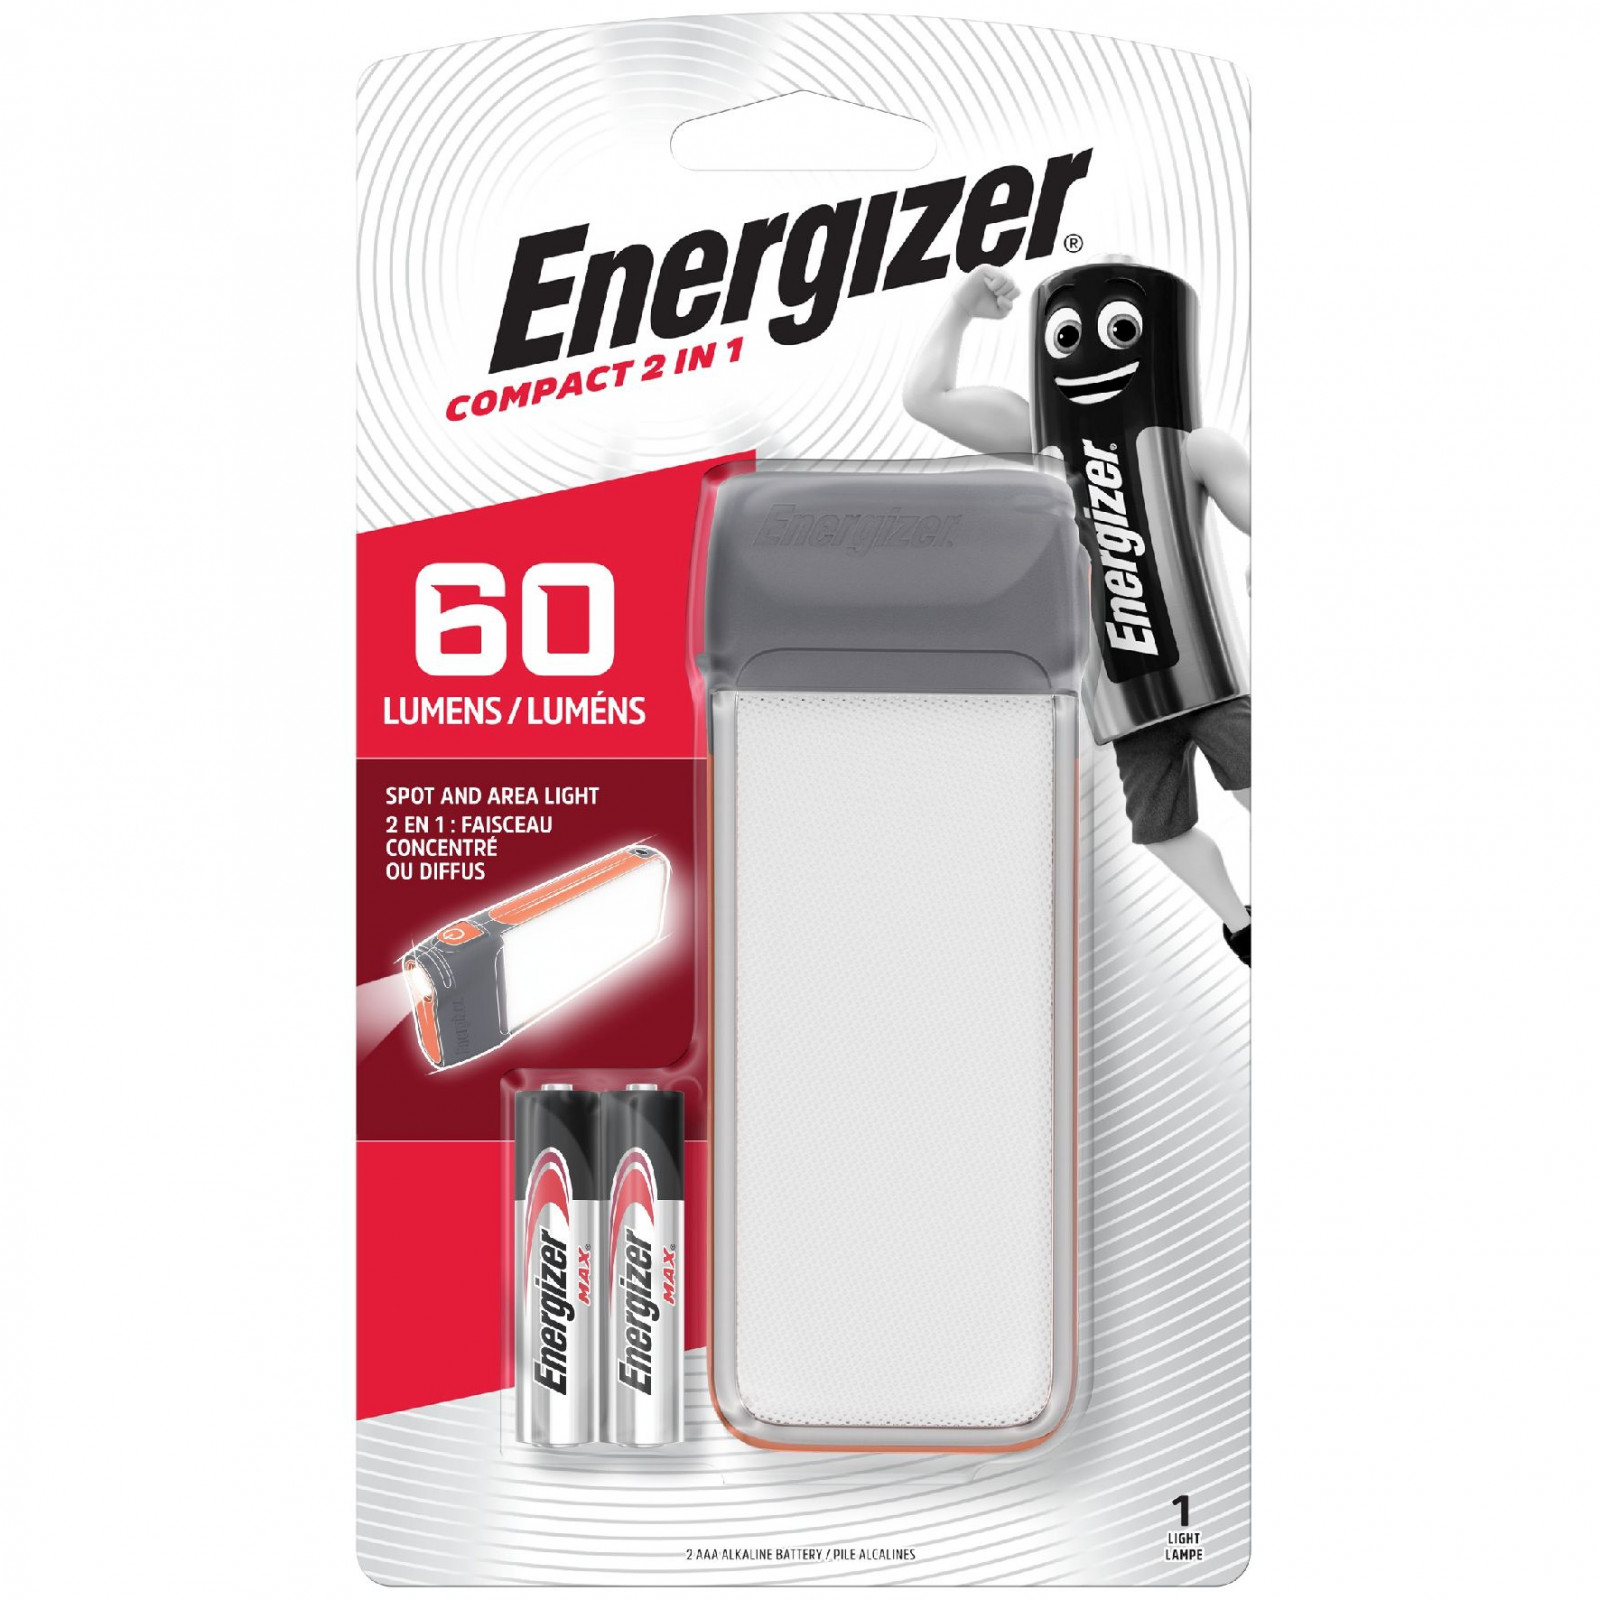 Svietidlo Energizer Fusion Compact 2-in-1 60lm Farba: čierna/červená